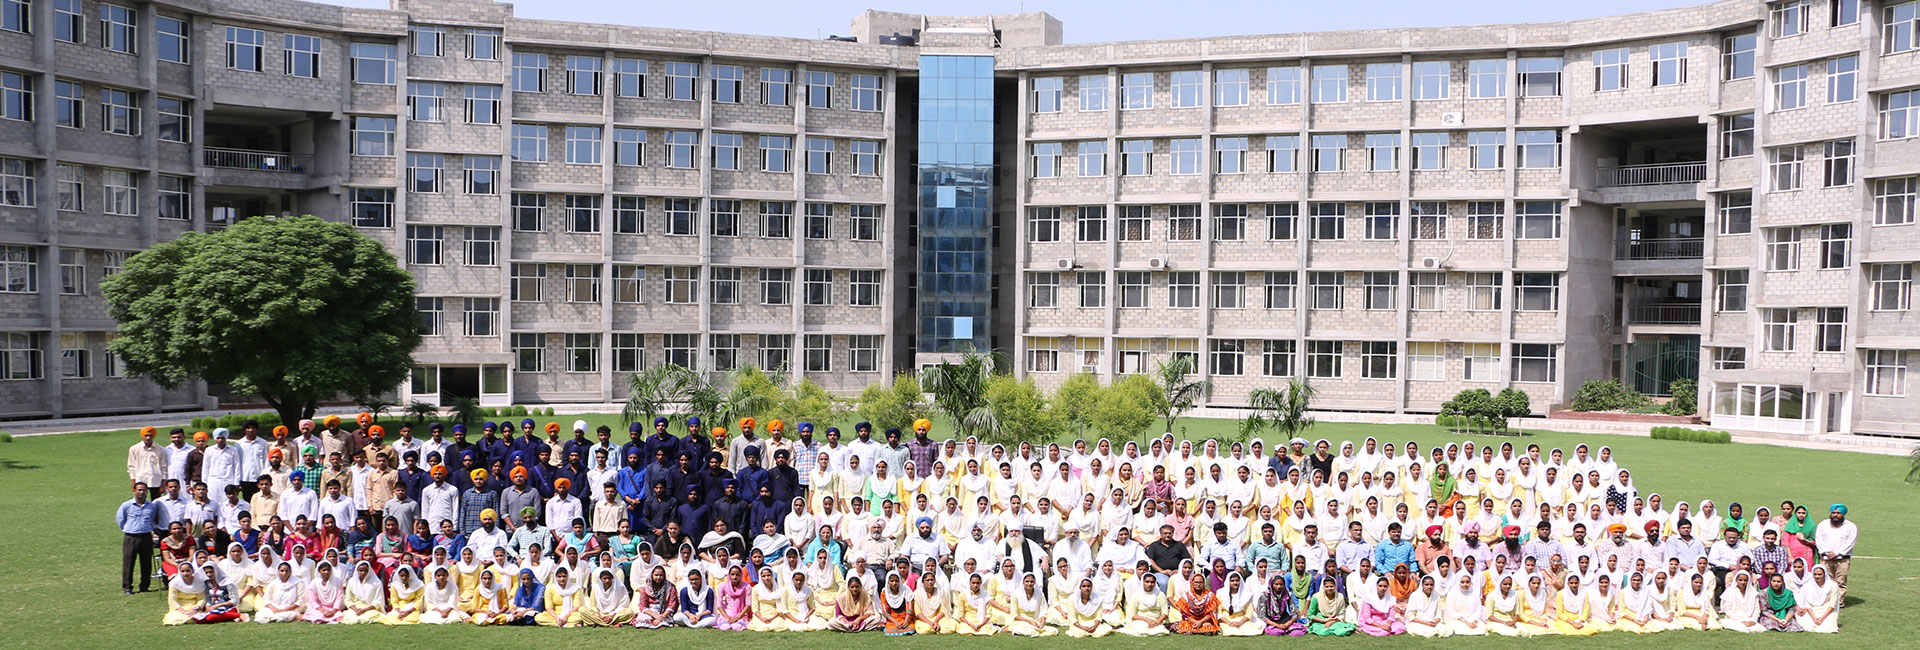 Akal University Image